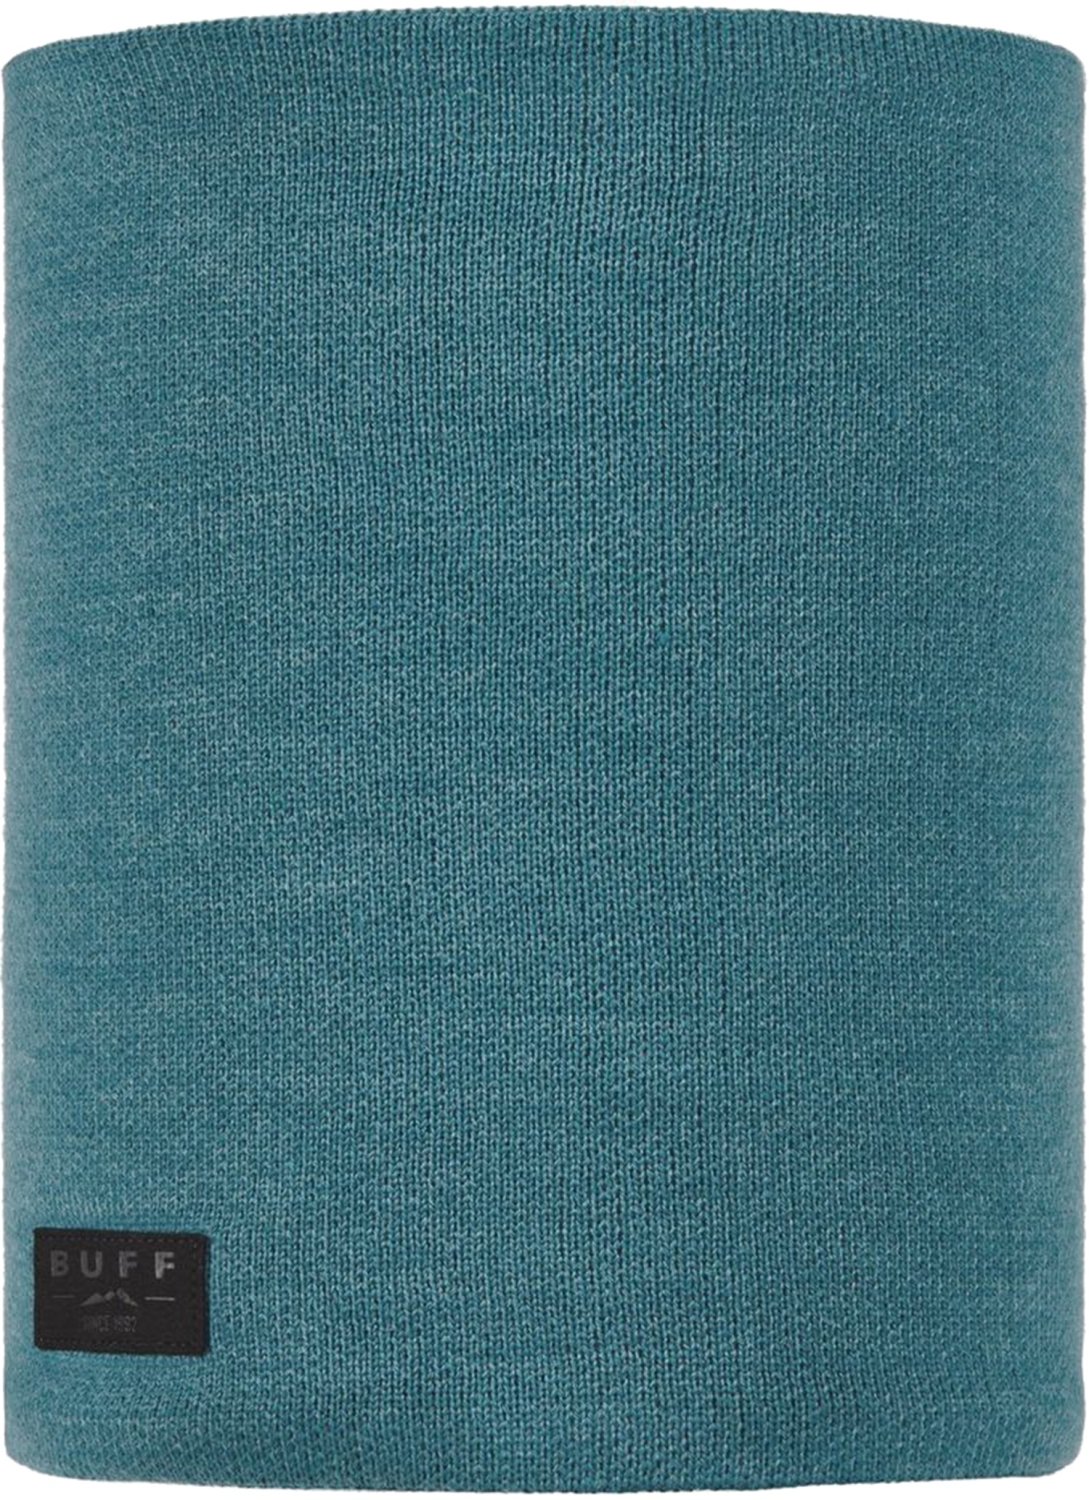 Шарф Buff Knitted & Fleece Neckwarmer Vaed Dusty Blue, US:one size, 129620.742.10.00